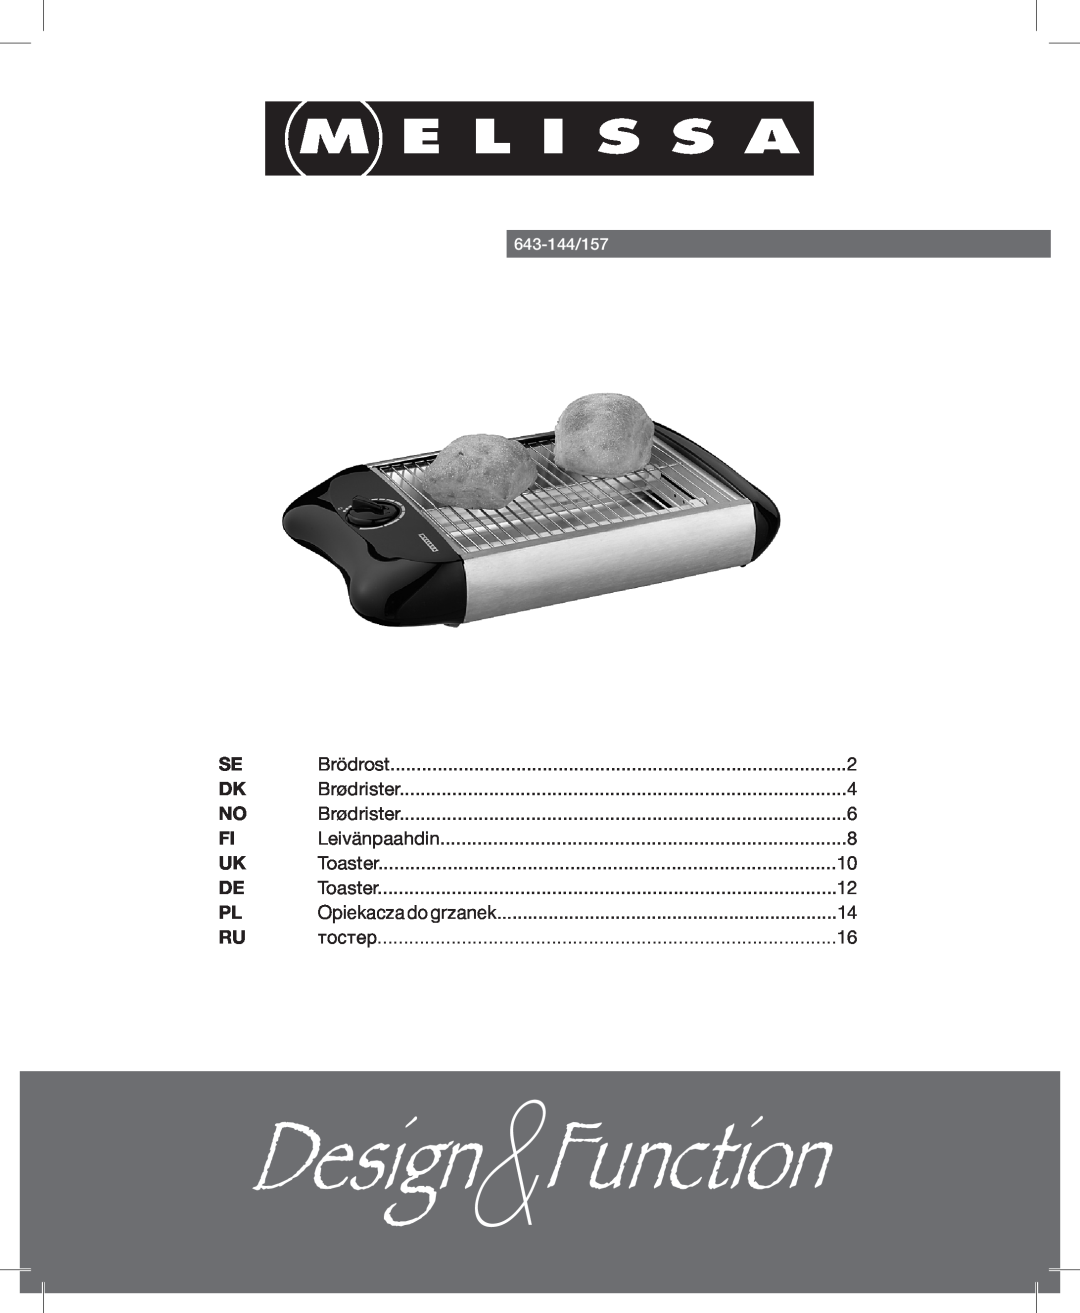 Melissa 643-144/157 manual DesignFunction 